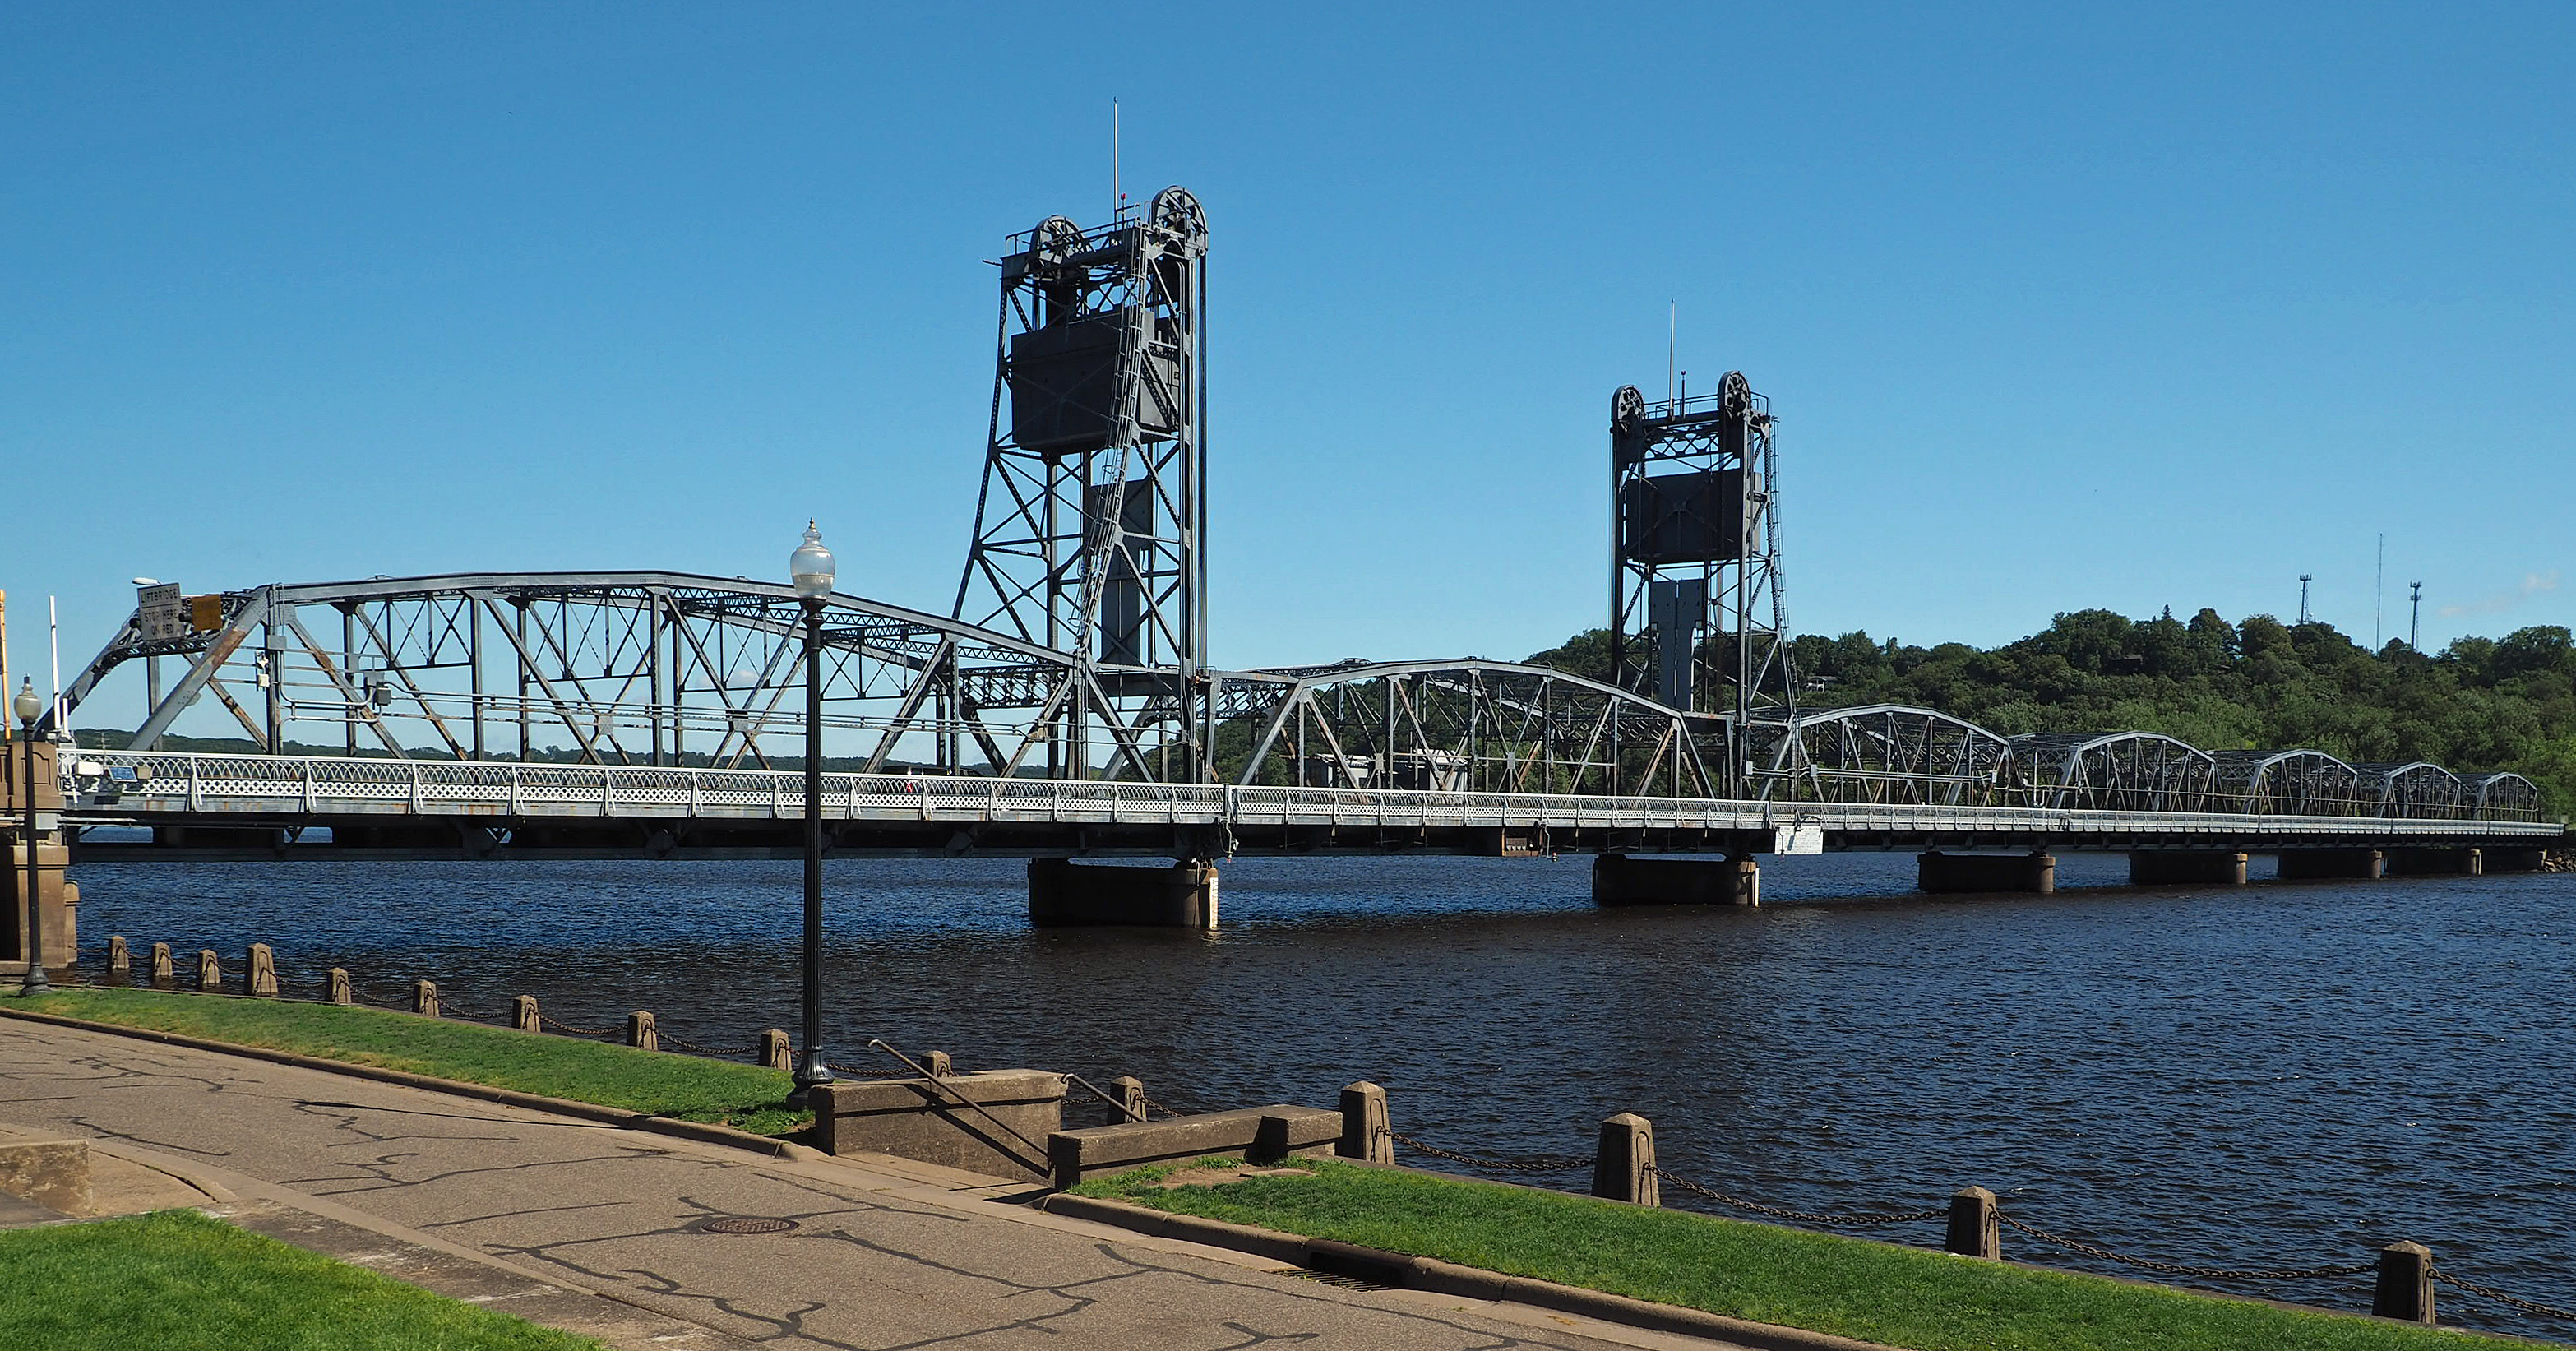 File:Stillwater Bridge 2017.jpg - Wikimedia Commons